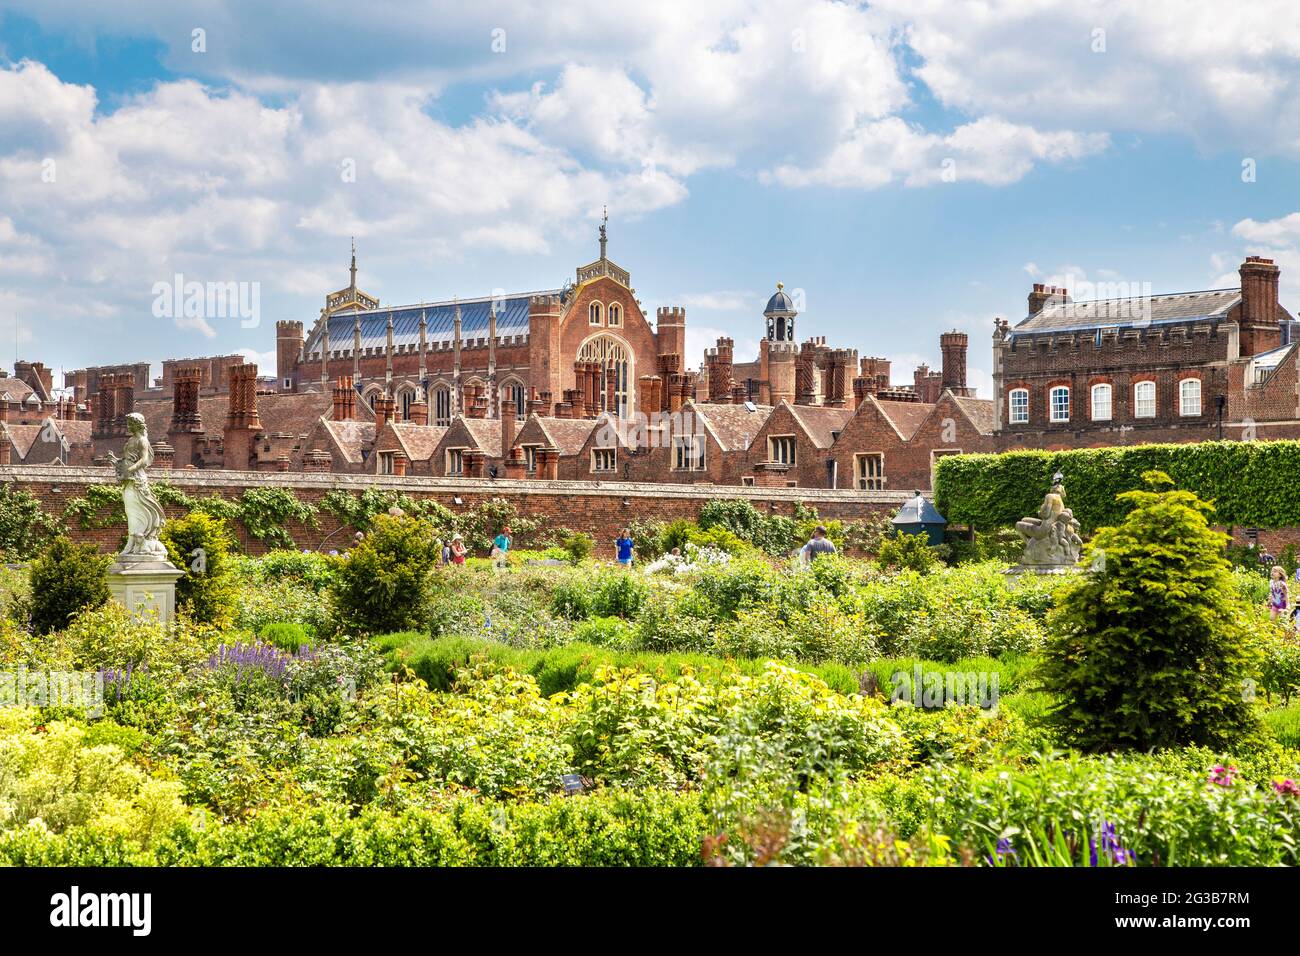 View of the Rose Garden at the tudor style Hampton Court Palace, Richmond, London, UK Stock Photo